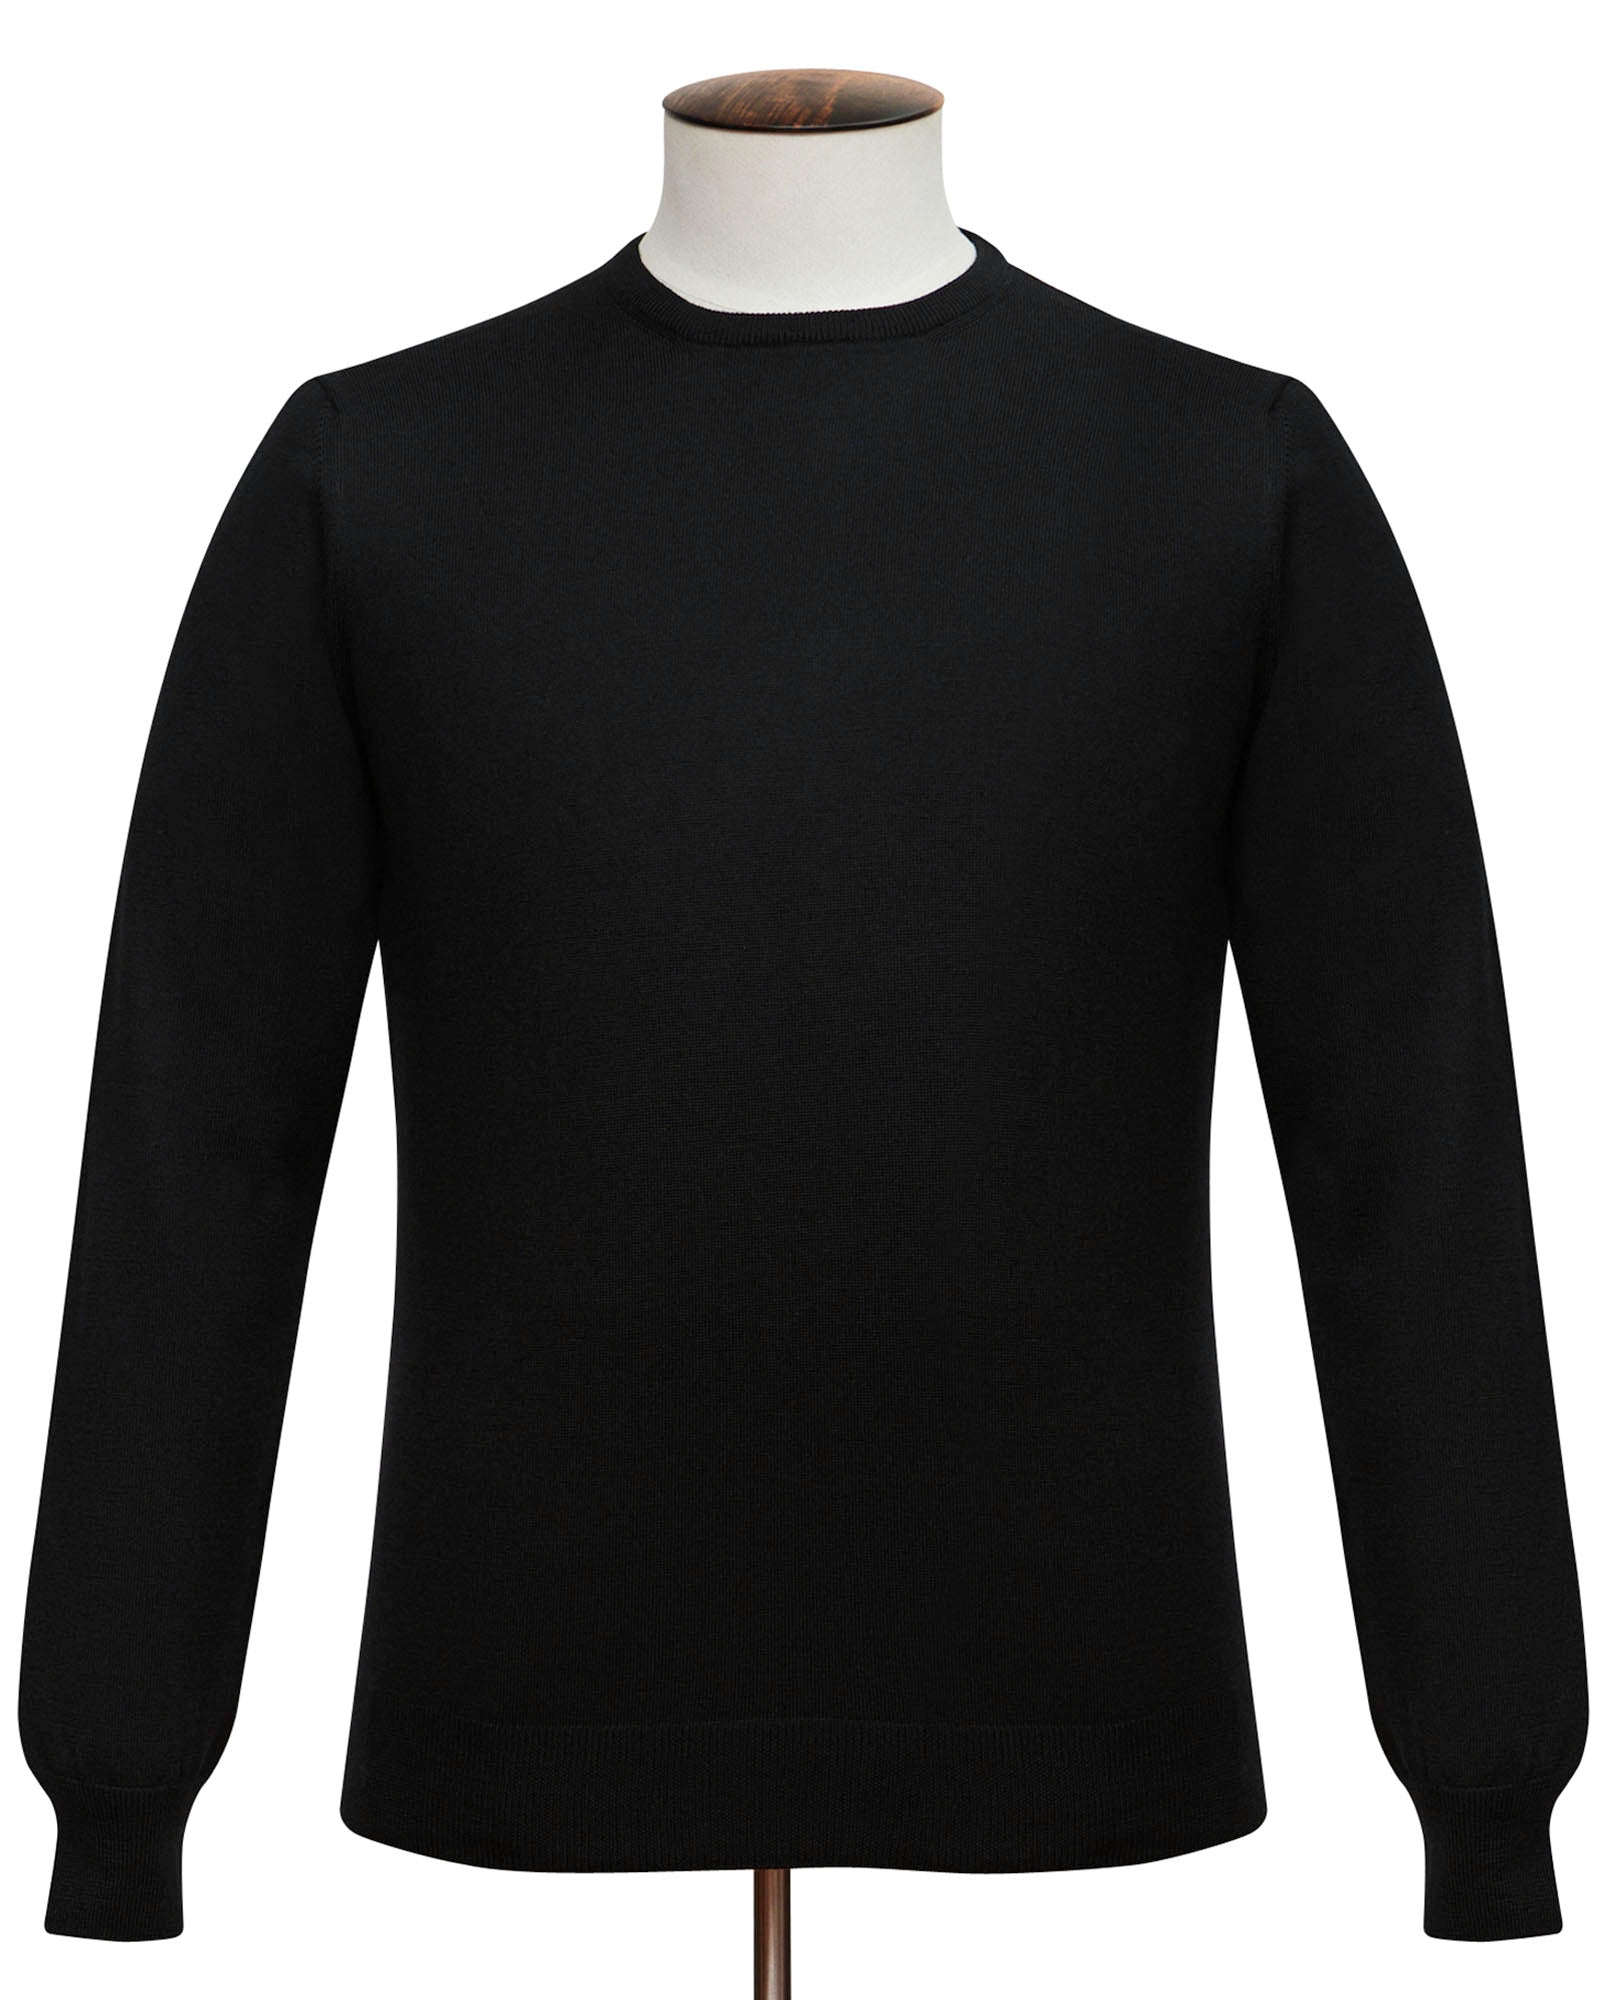 Black Merino Wool Crew Neck Sweater